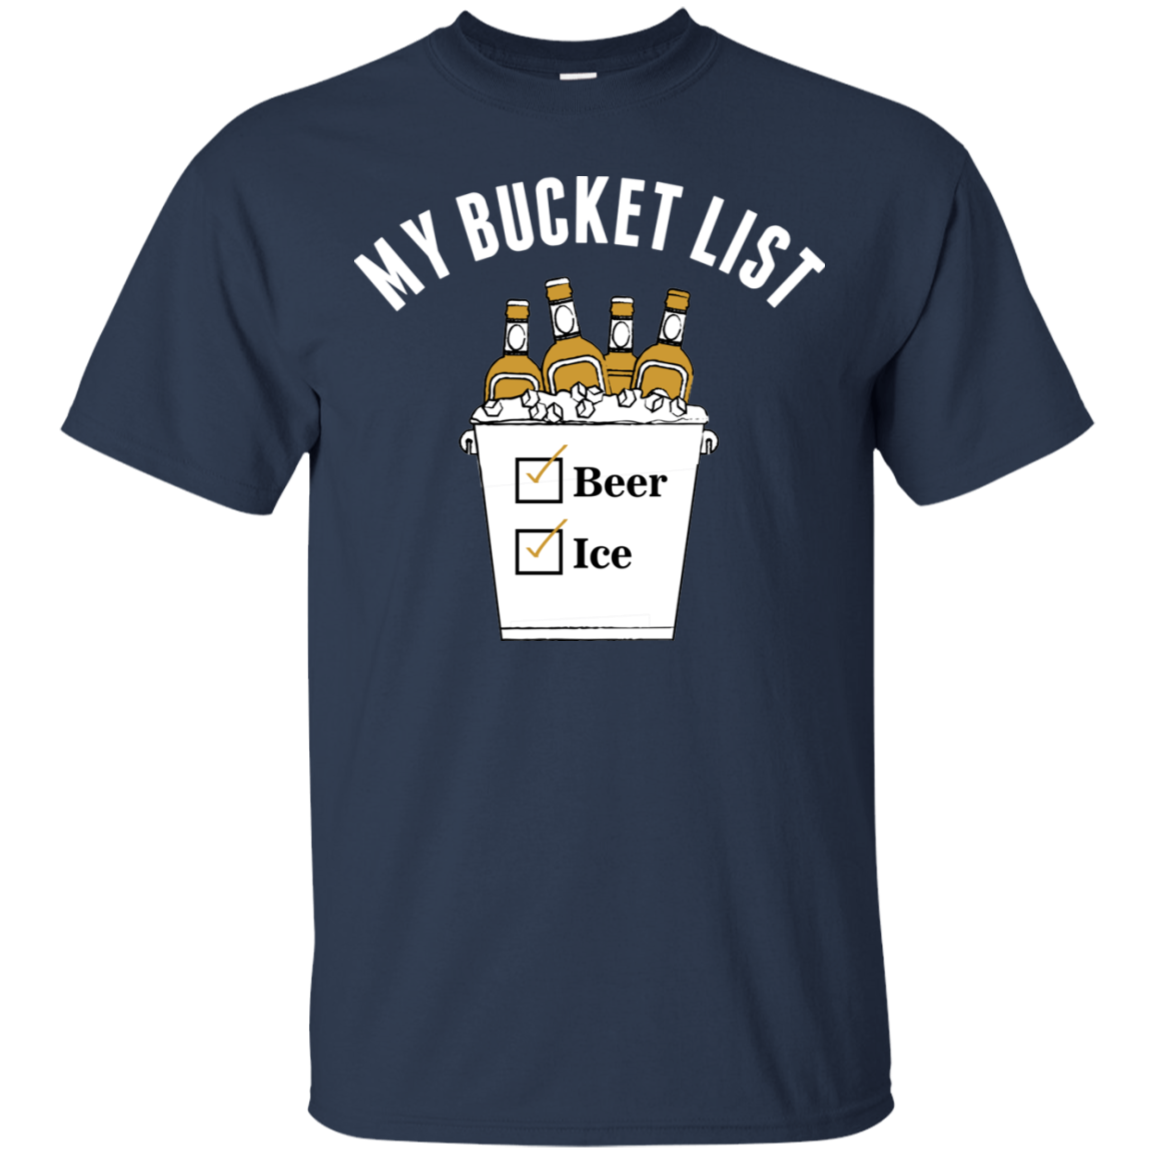 My Bucket List v3.0 T-Shirt Apparel - The Beer Lodge